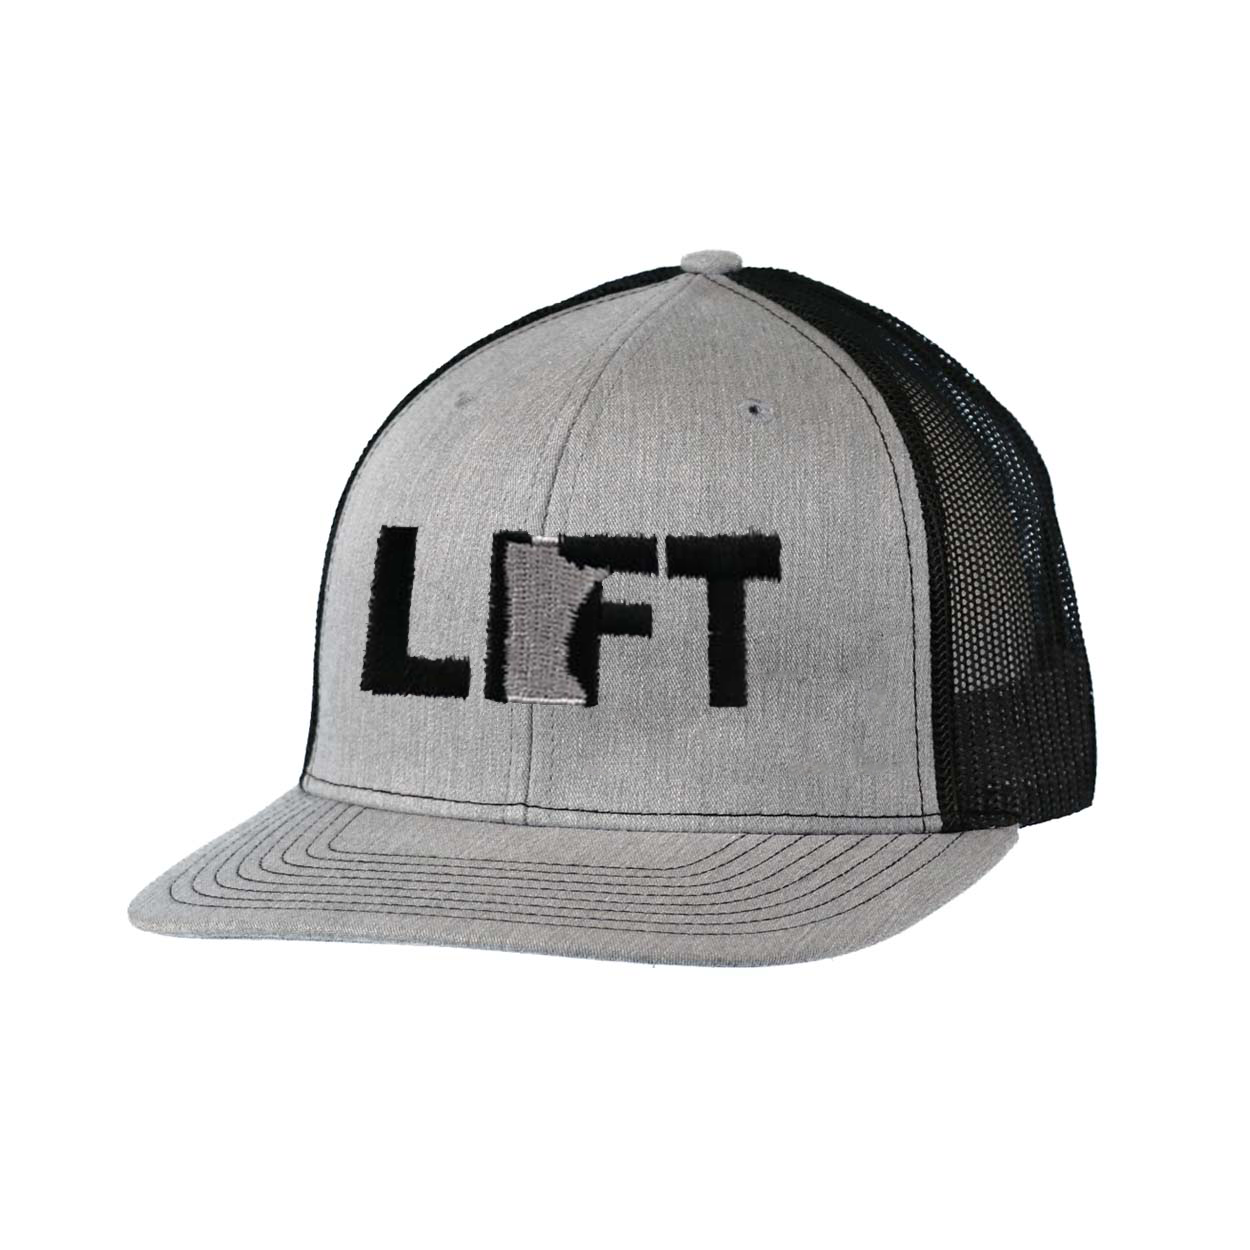 Lift Minnesota Classic Pro 3D Puff Embroidered Snapback Trucker Hat Heather Gray/Black